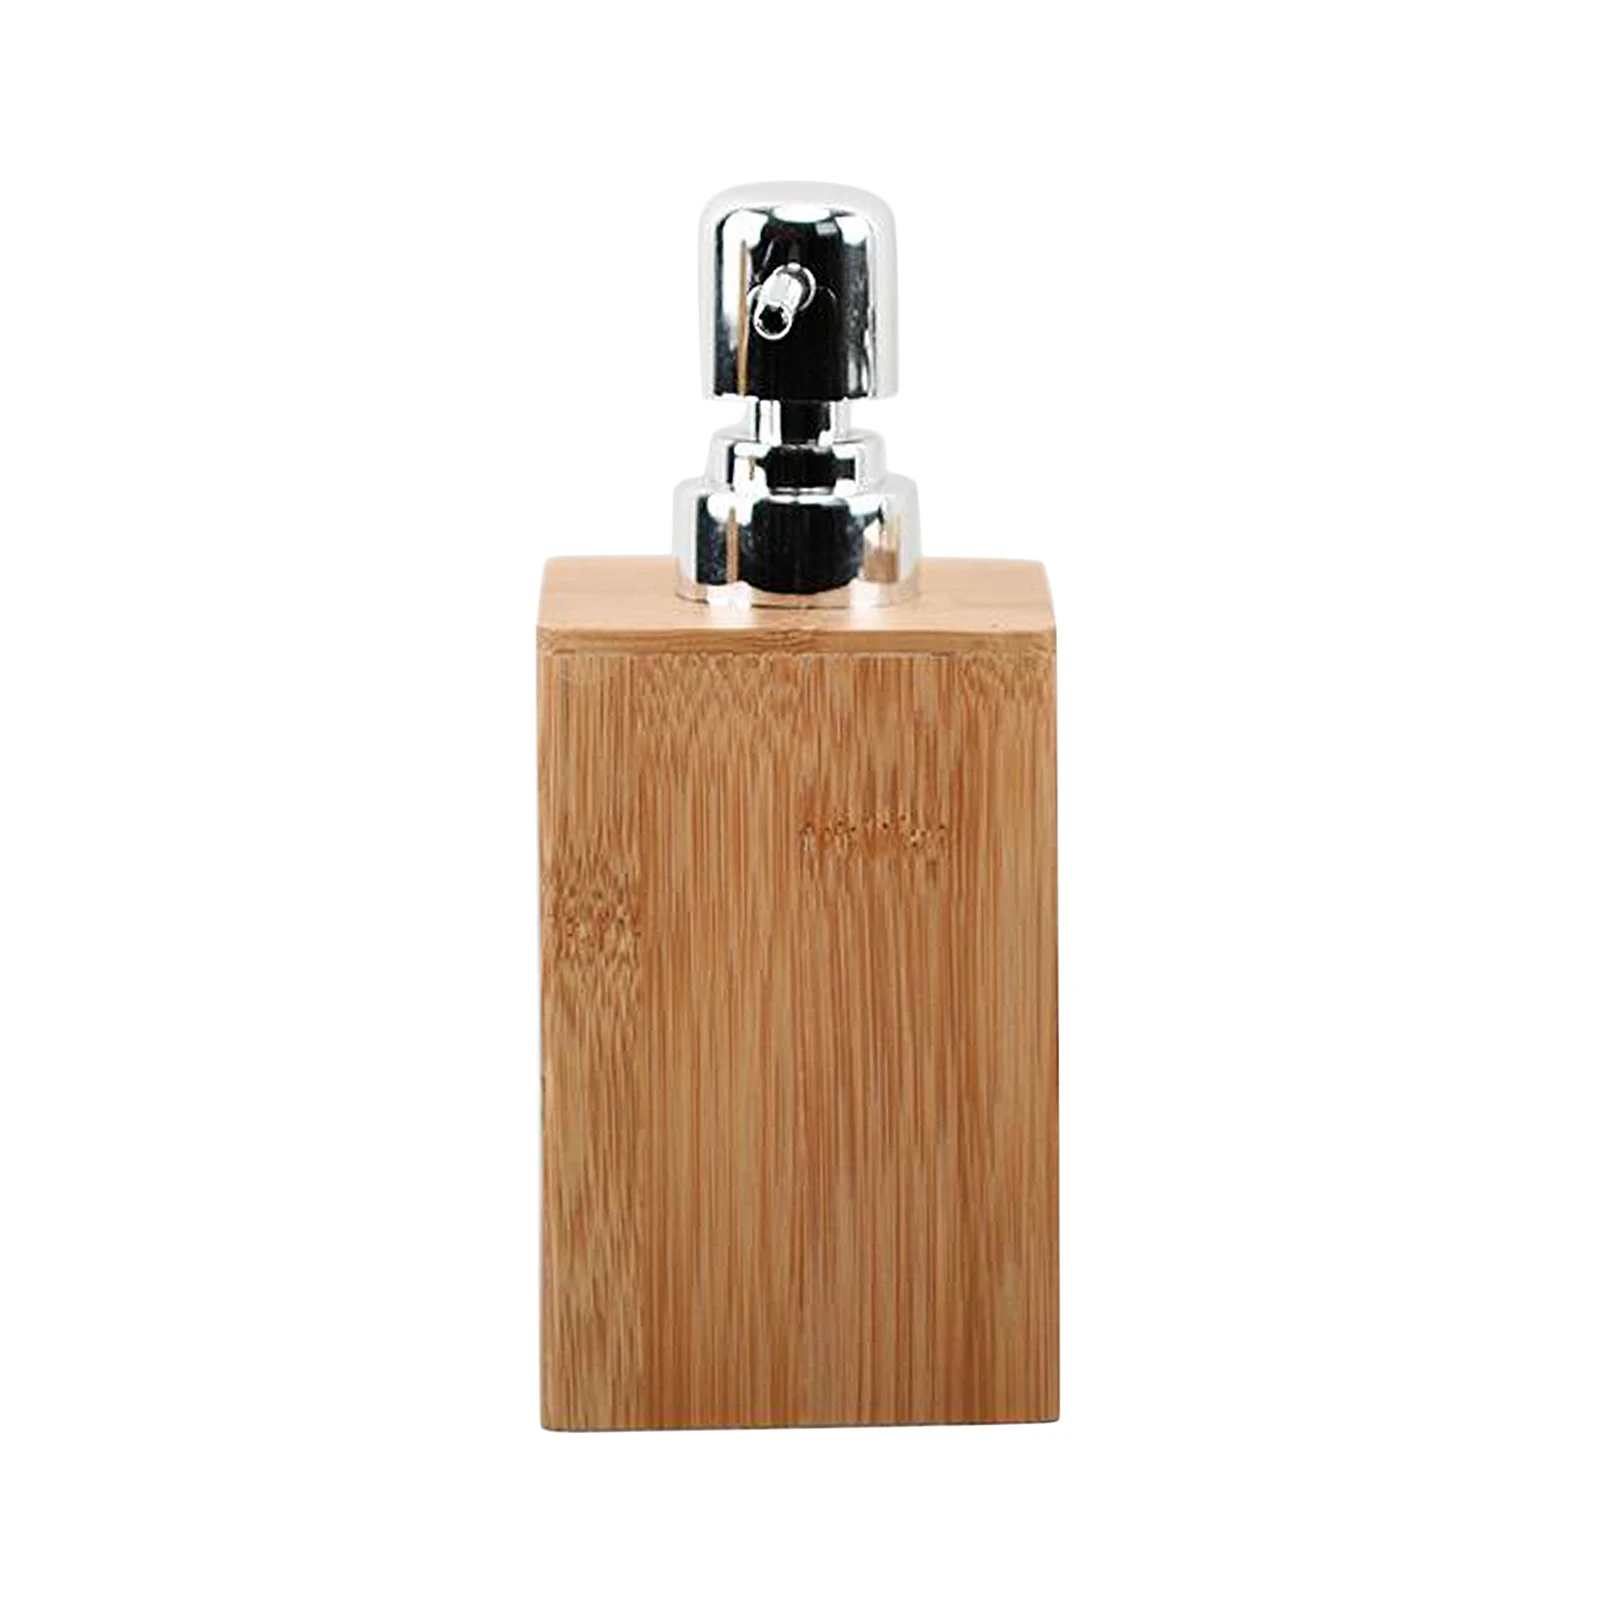 7ozEmpty Soap Dispenser Wooden Countertop Soap Pump Bottles Shower Gel Container